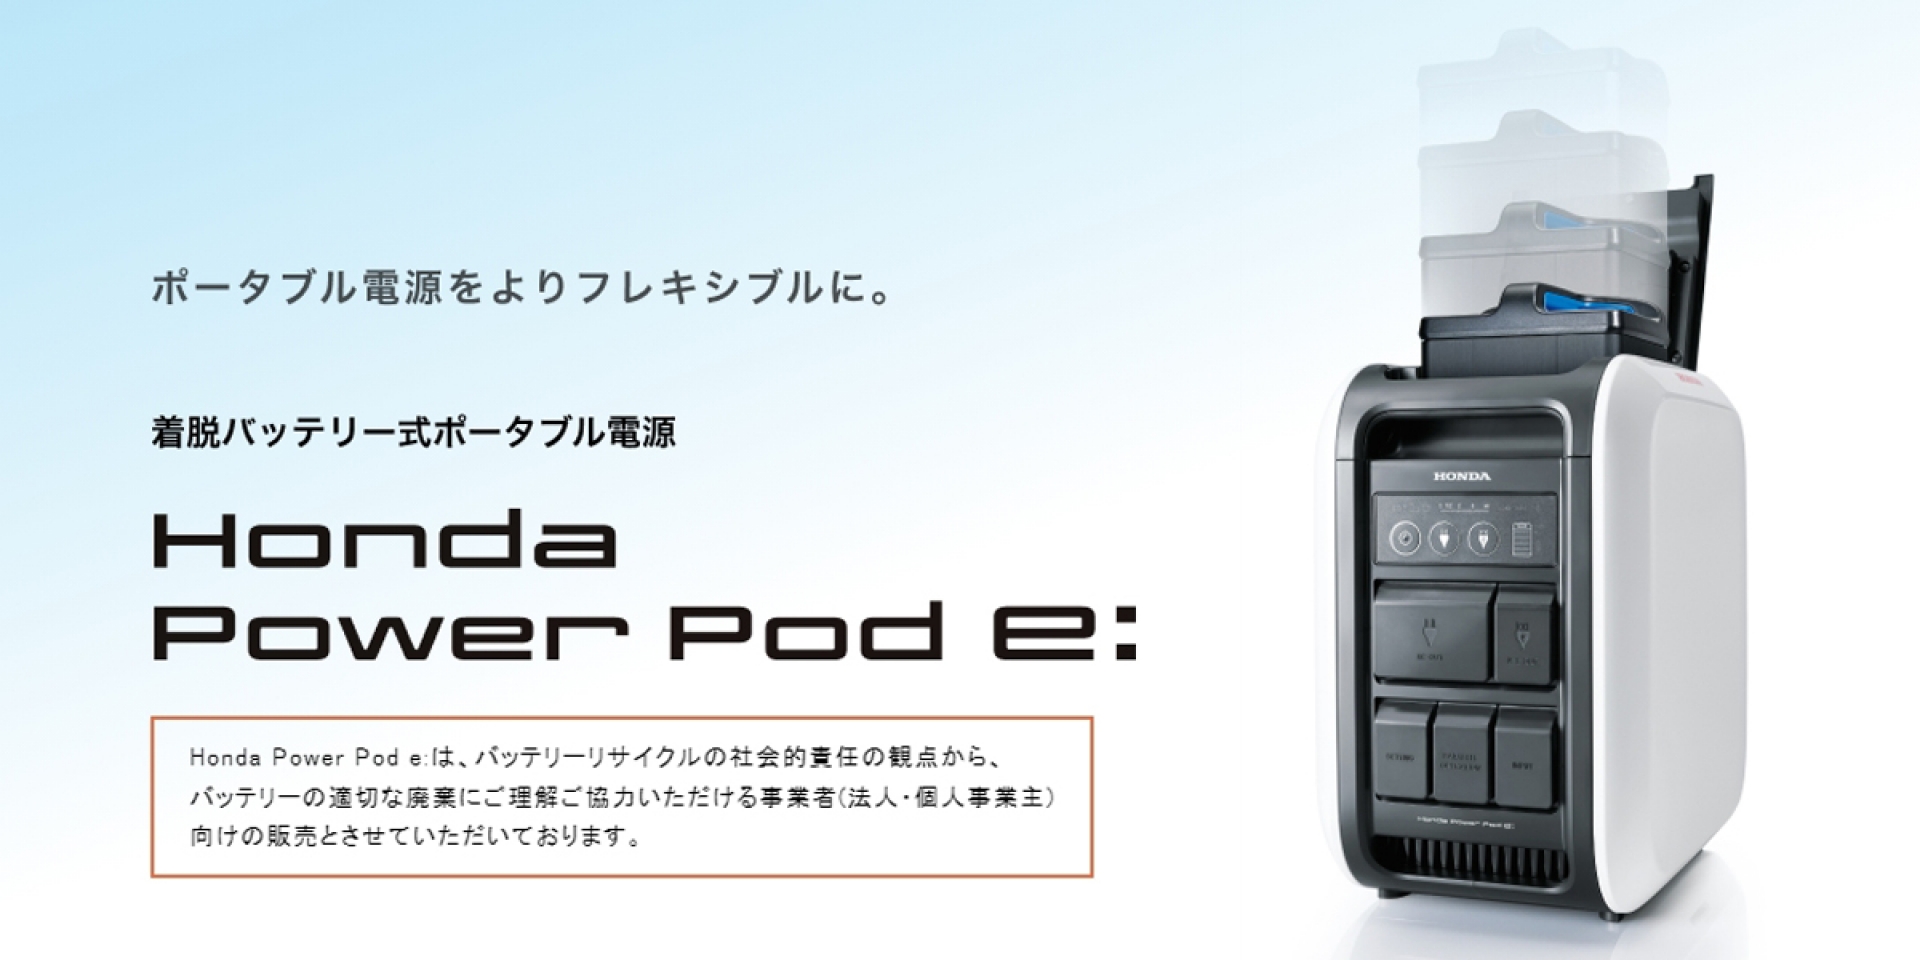 Honda 推出萬用行動電源！ 「Honda Power Pod e:」讓速克達、居家用電一次搞定